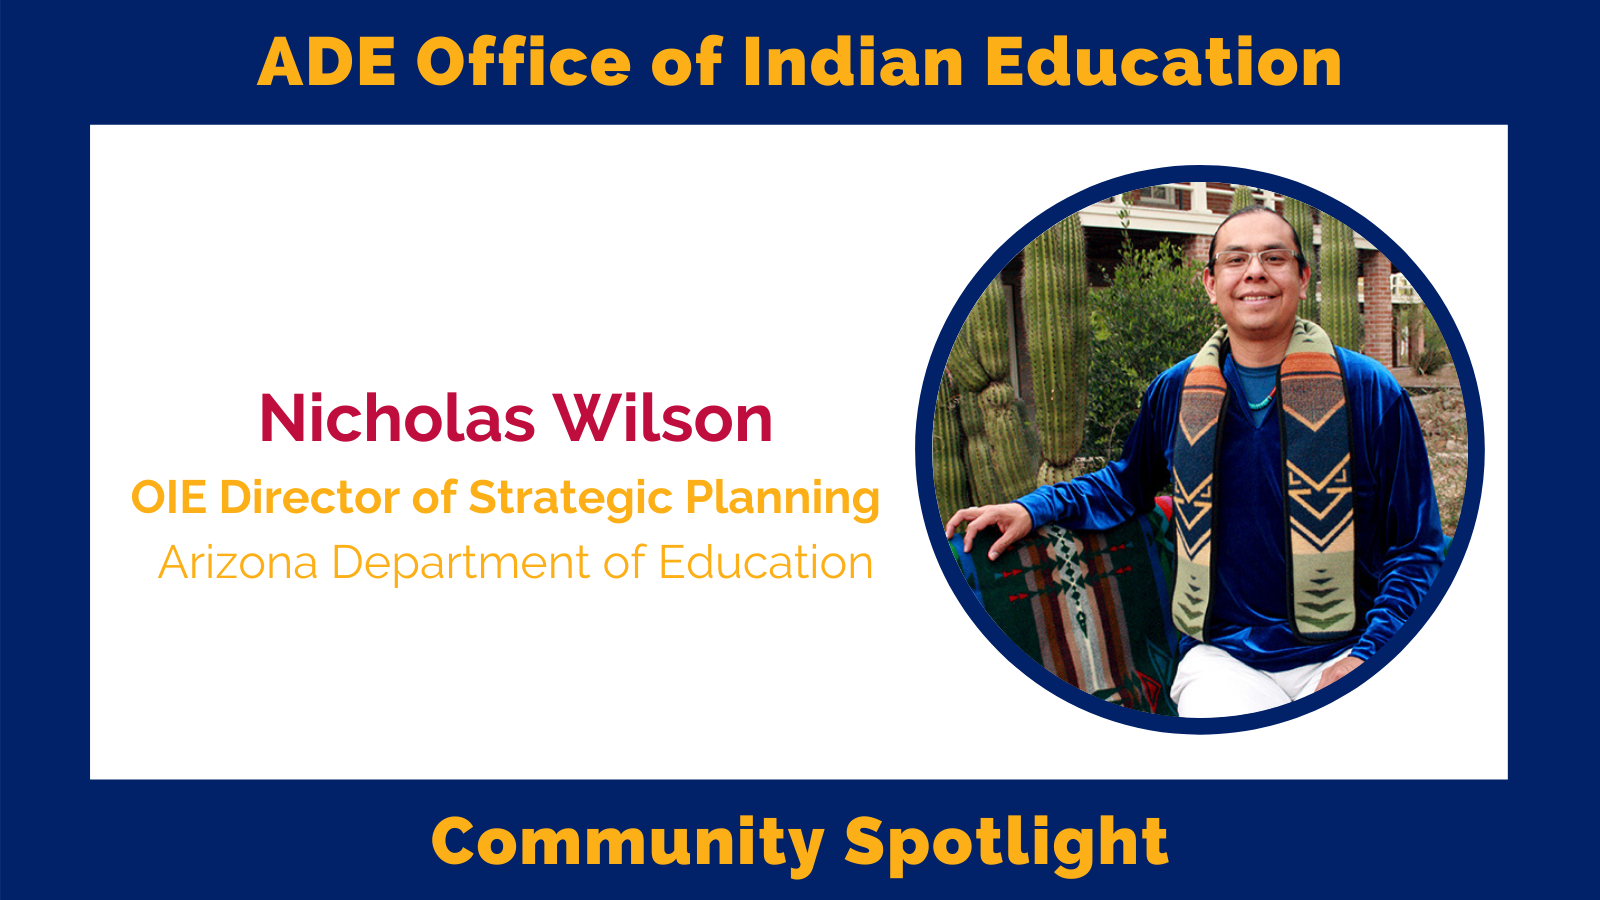 Nicholas Wilson, OIE Director of Strategic Planning, Arizona Department of Education